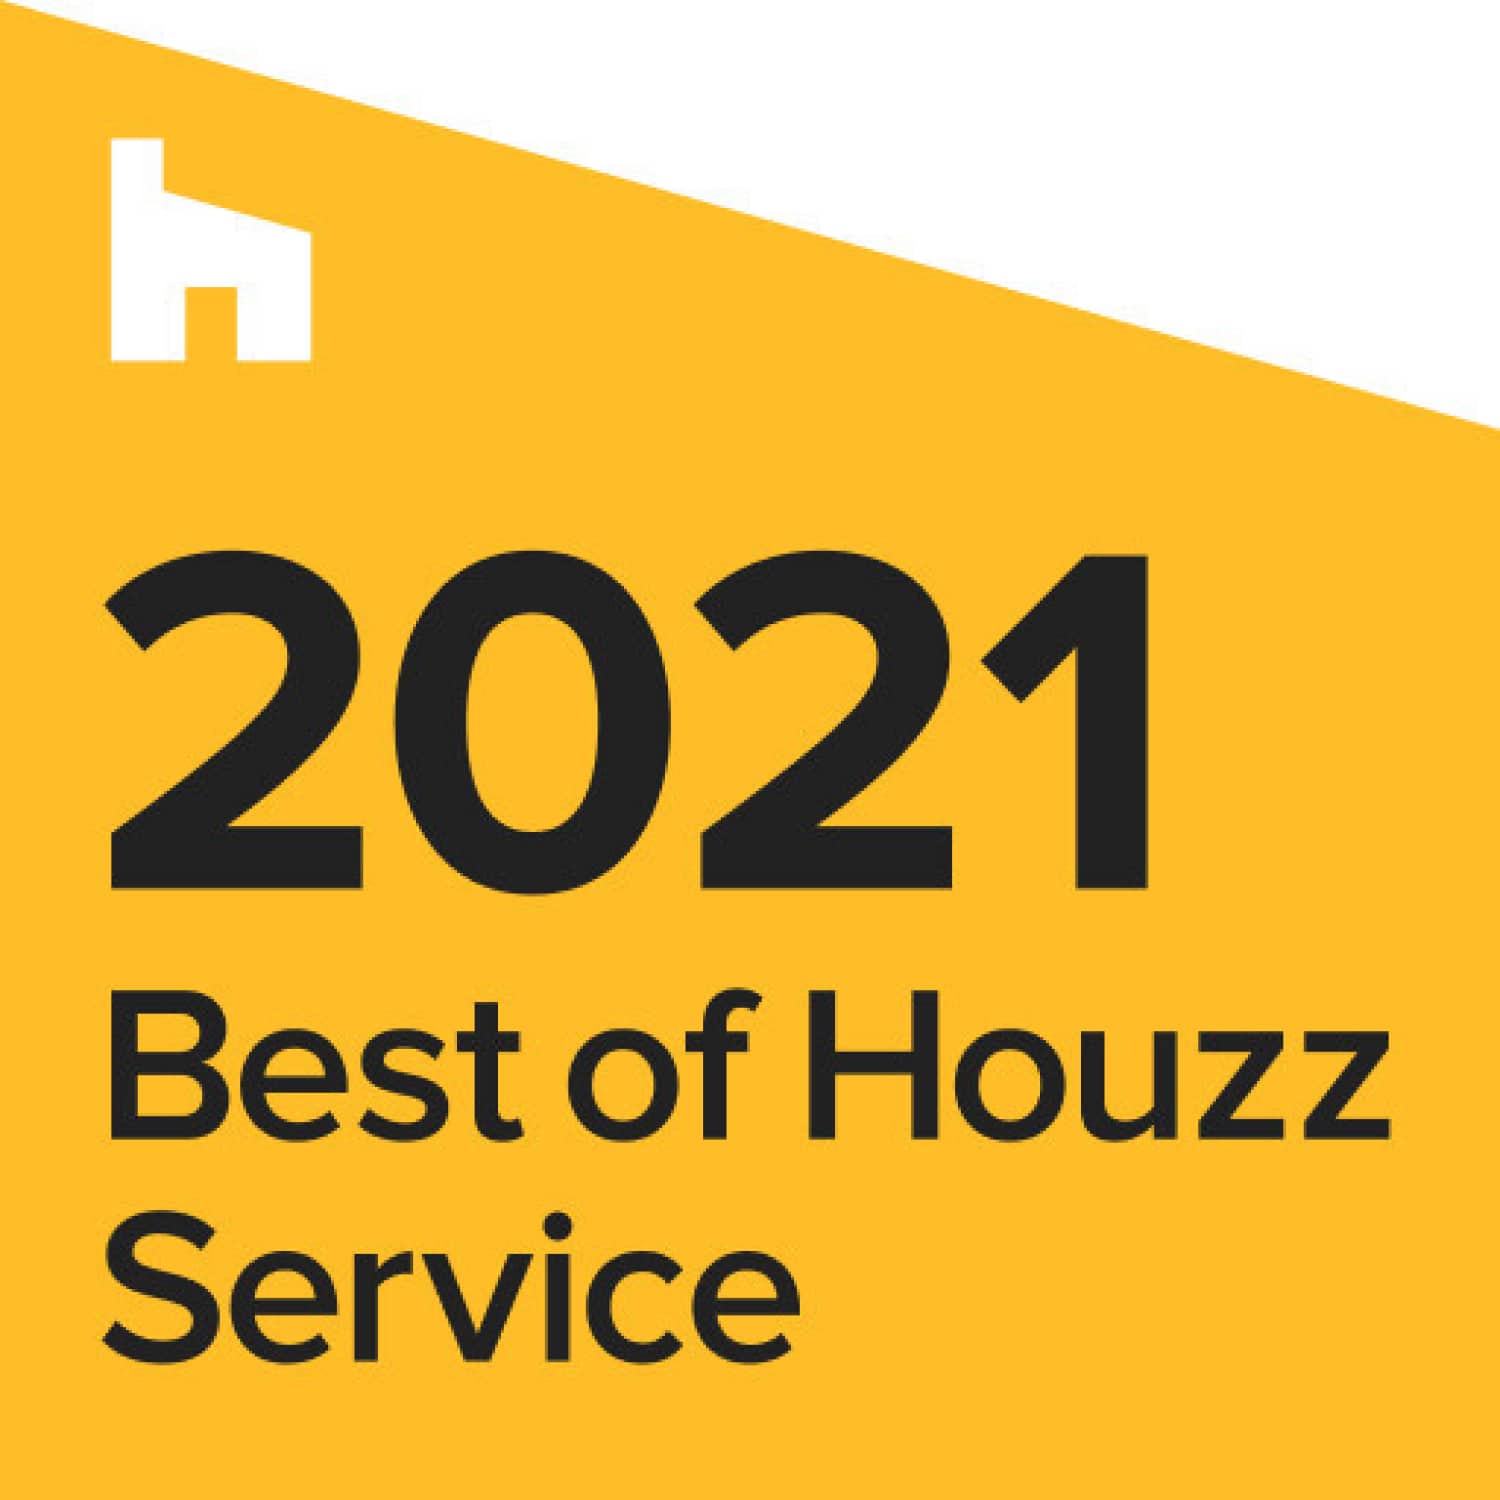 2021 Best of Houzz service for exceptional interior design.